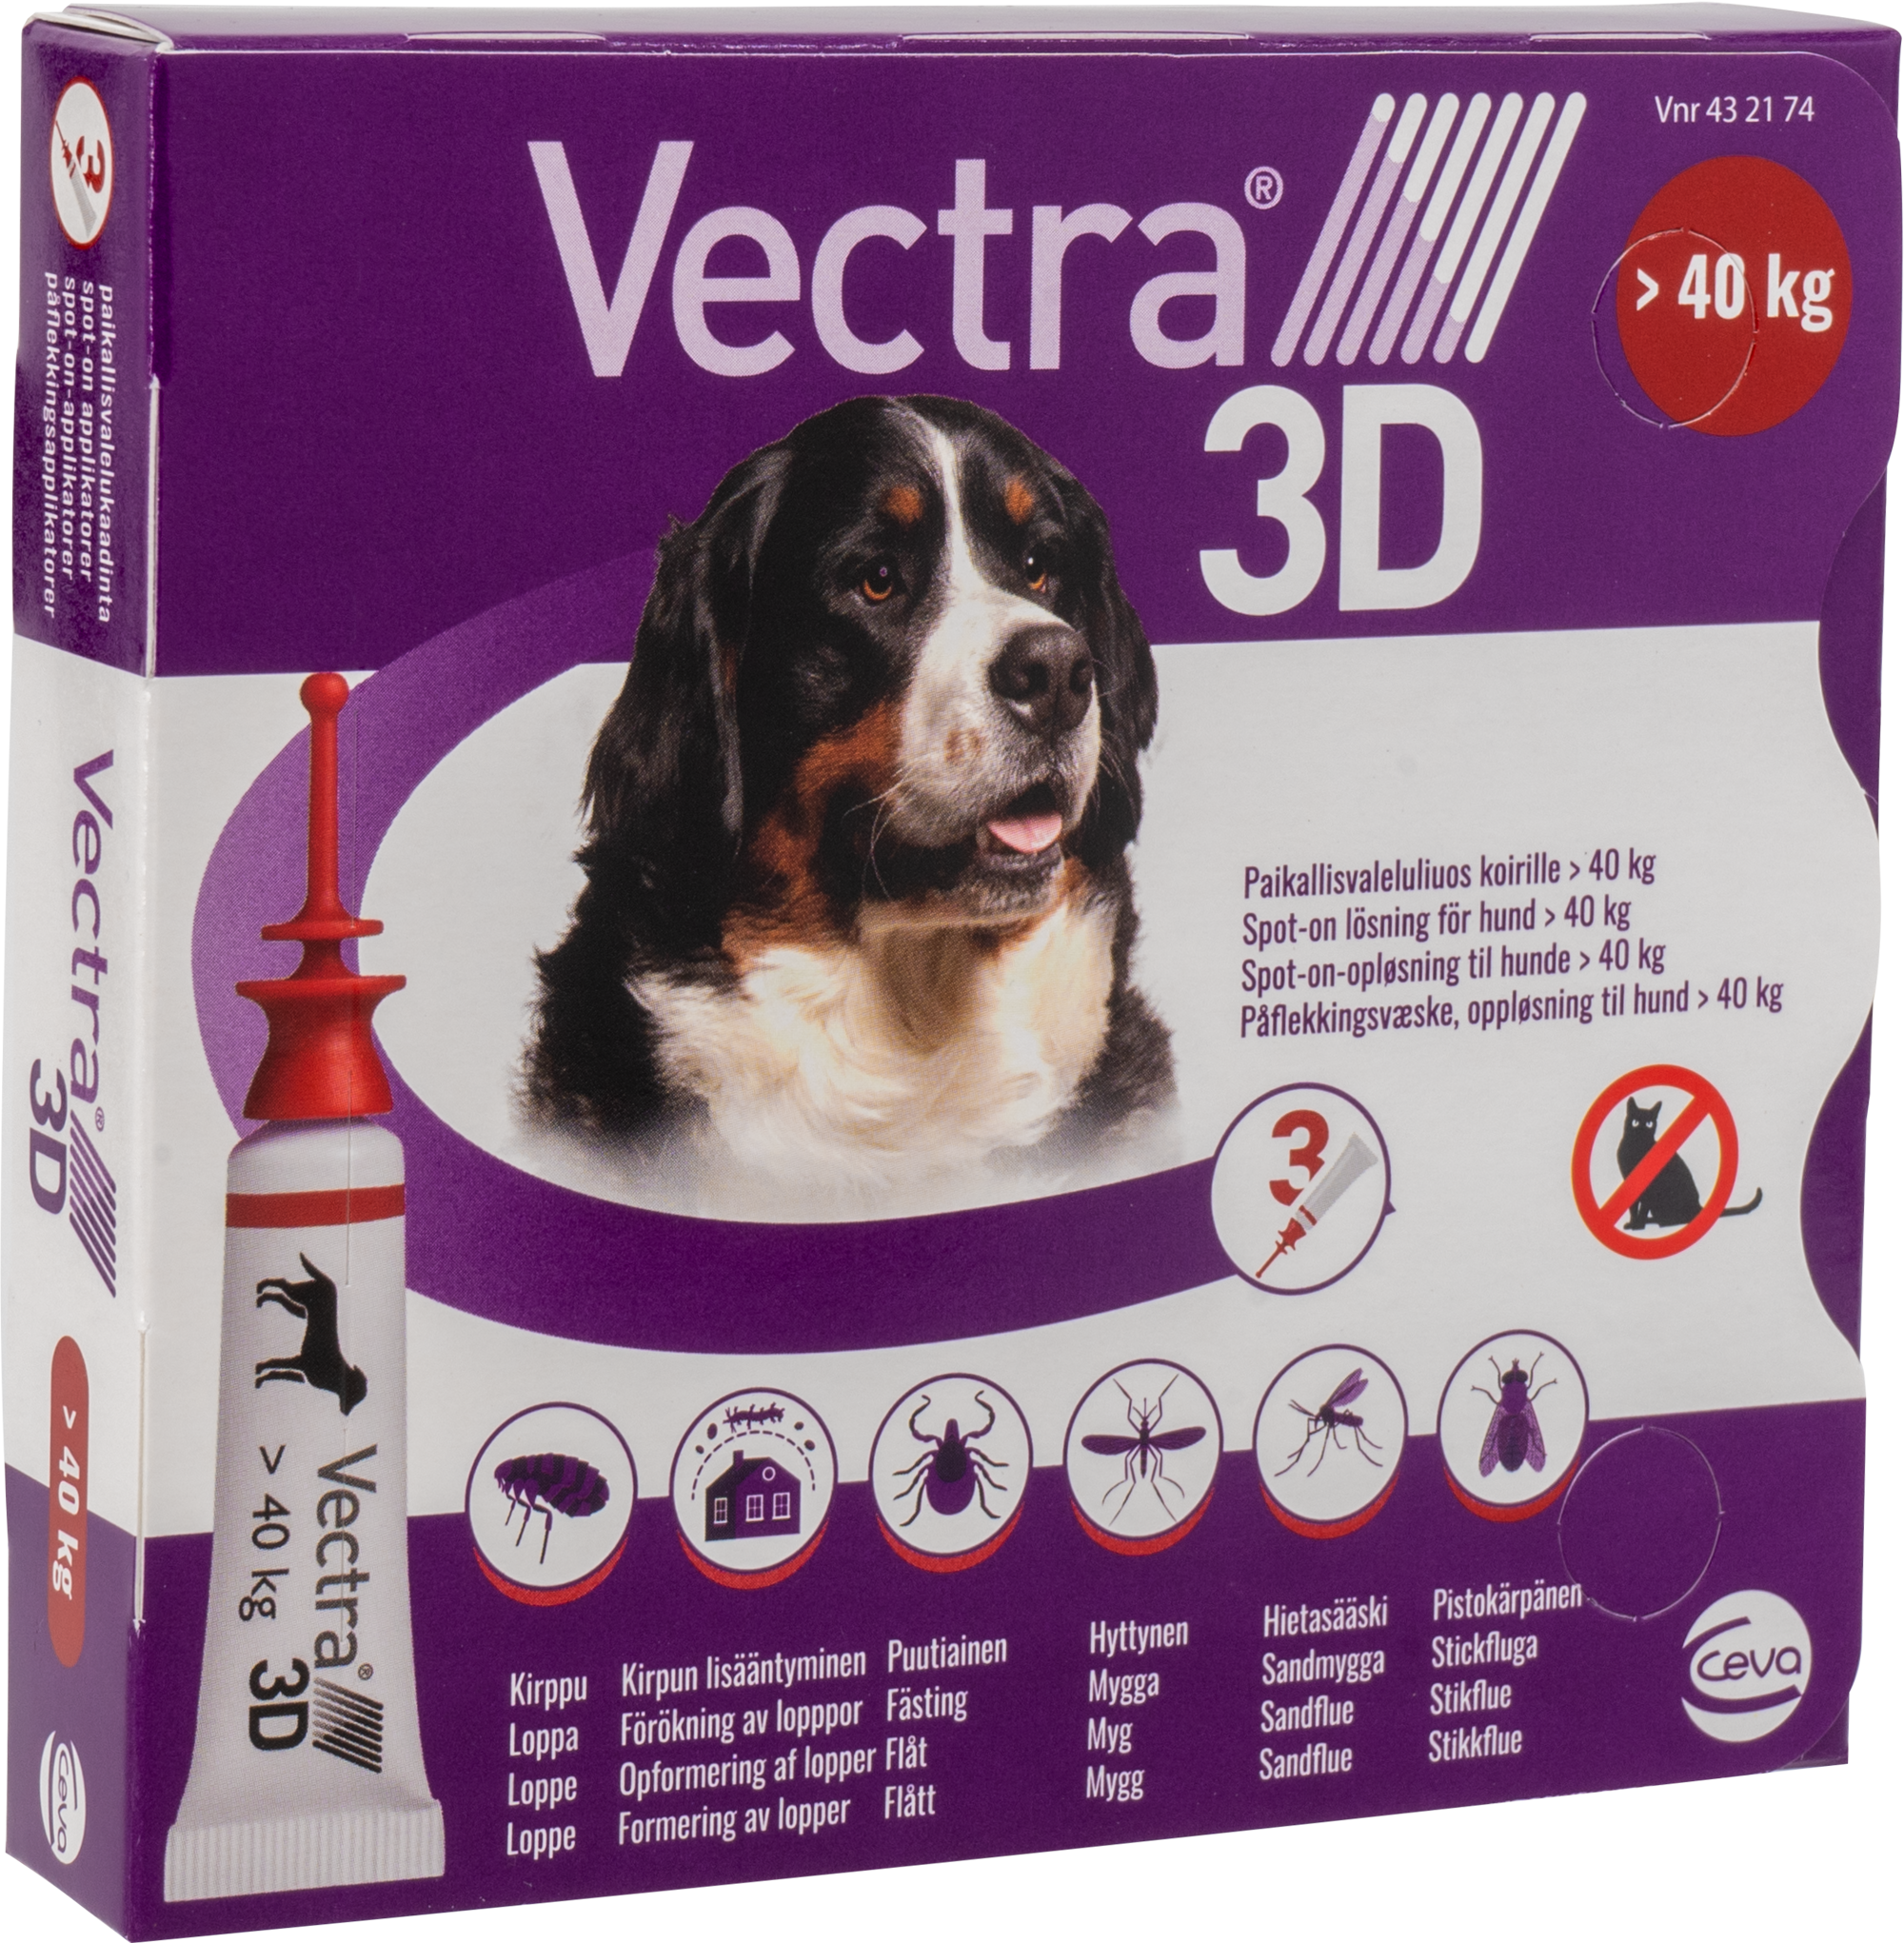 Vectra 3D - Spot-on-solution (dogs)>40 kg 3pk - (432174)